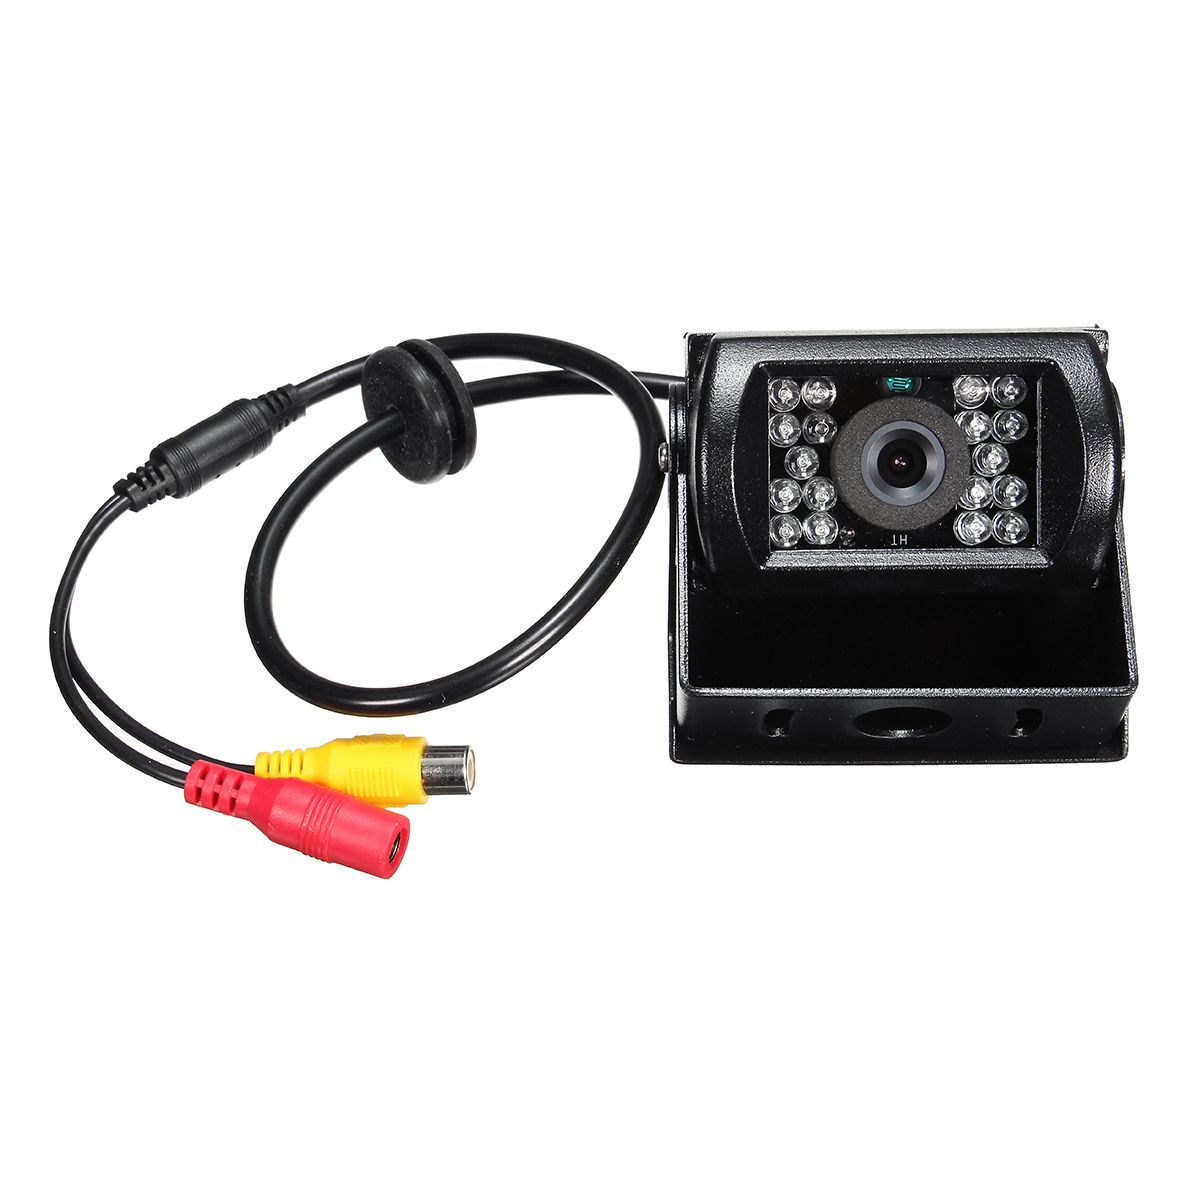 Wireless-Rear-View-Backup-Reverse-CCD-Camera-For-Car-Truck-Bus-Caravan-12-24V-1117450